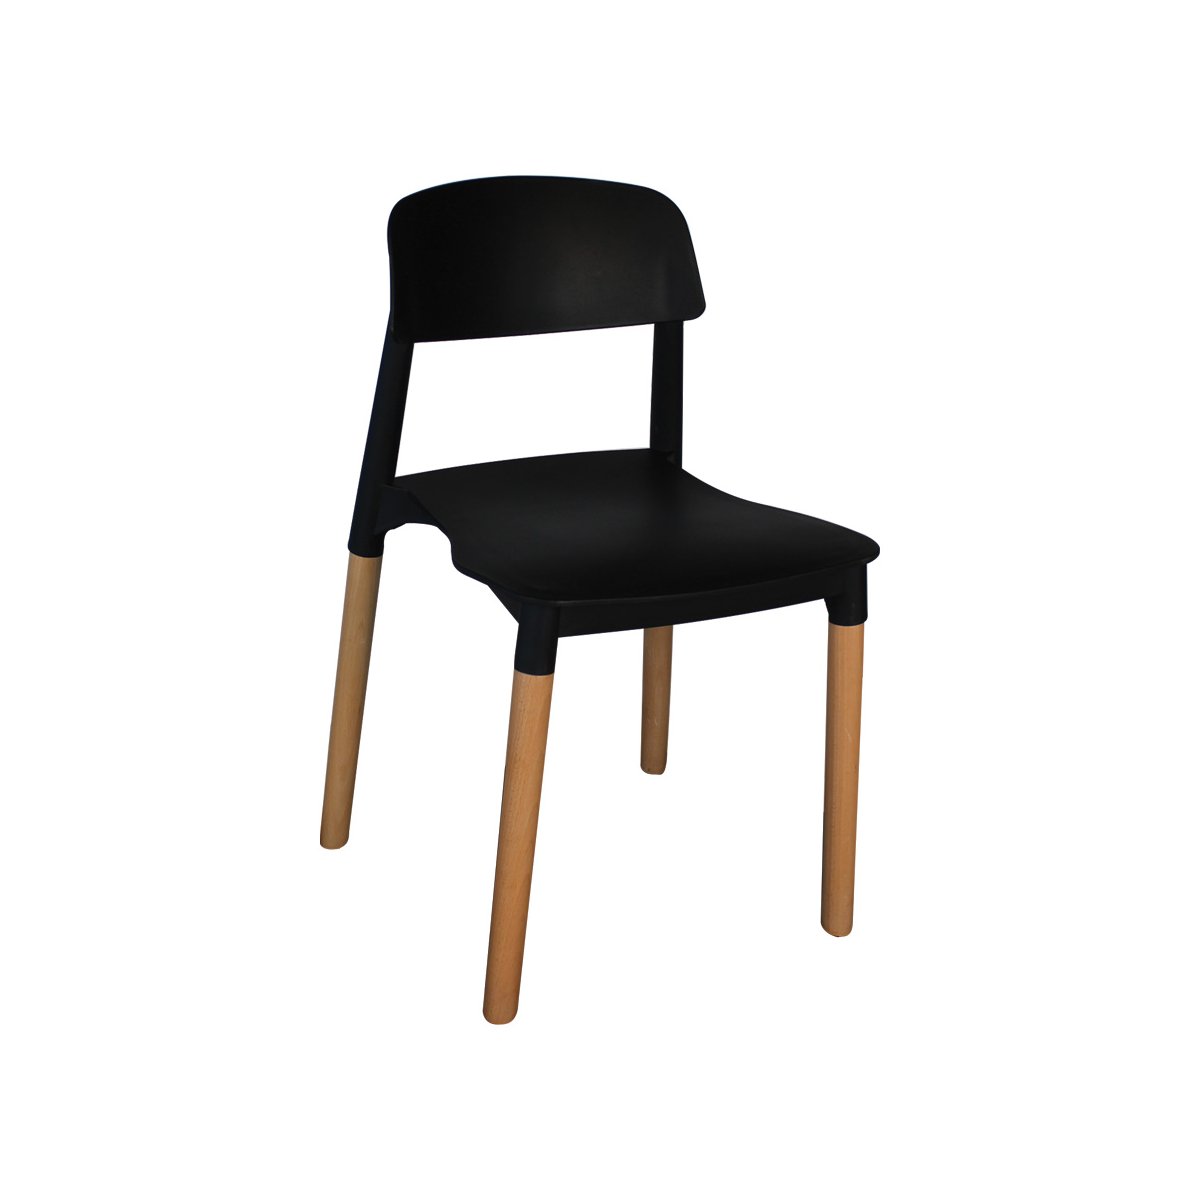 Chaise design moderne noir